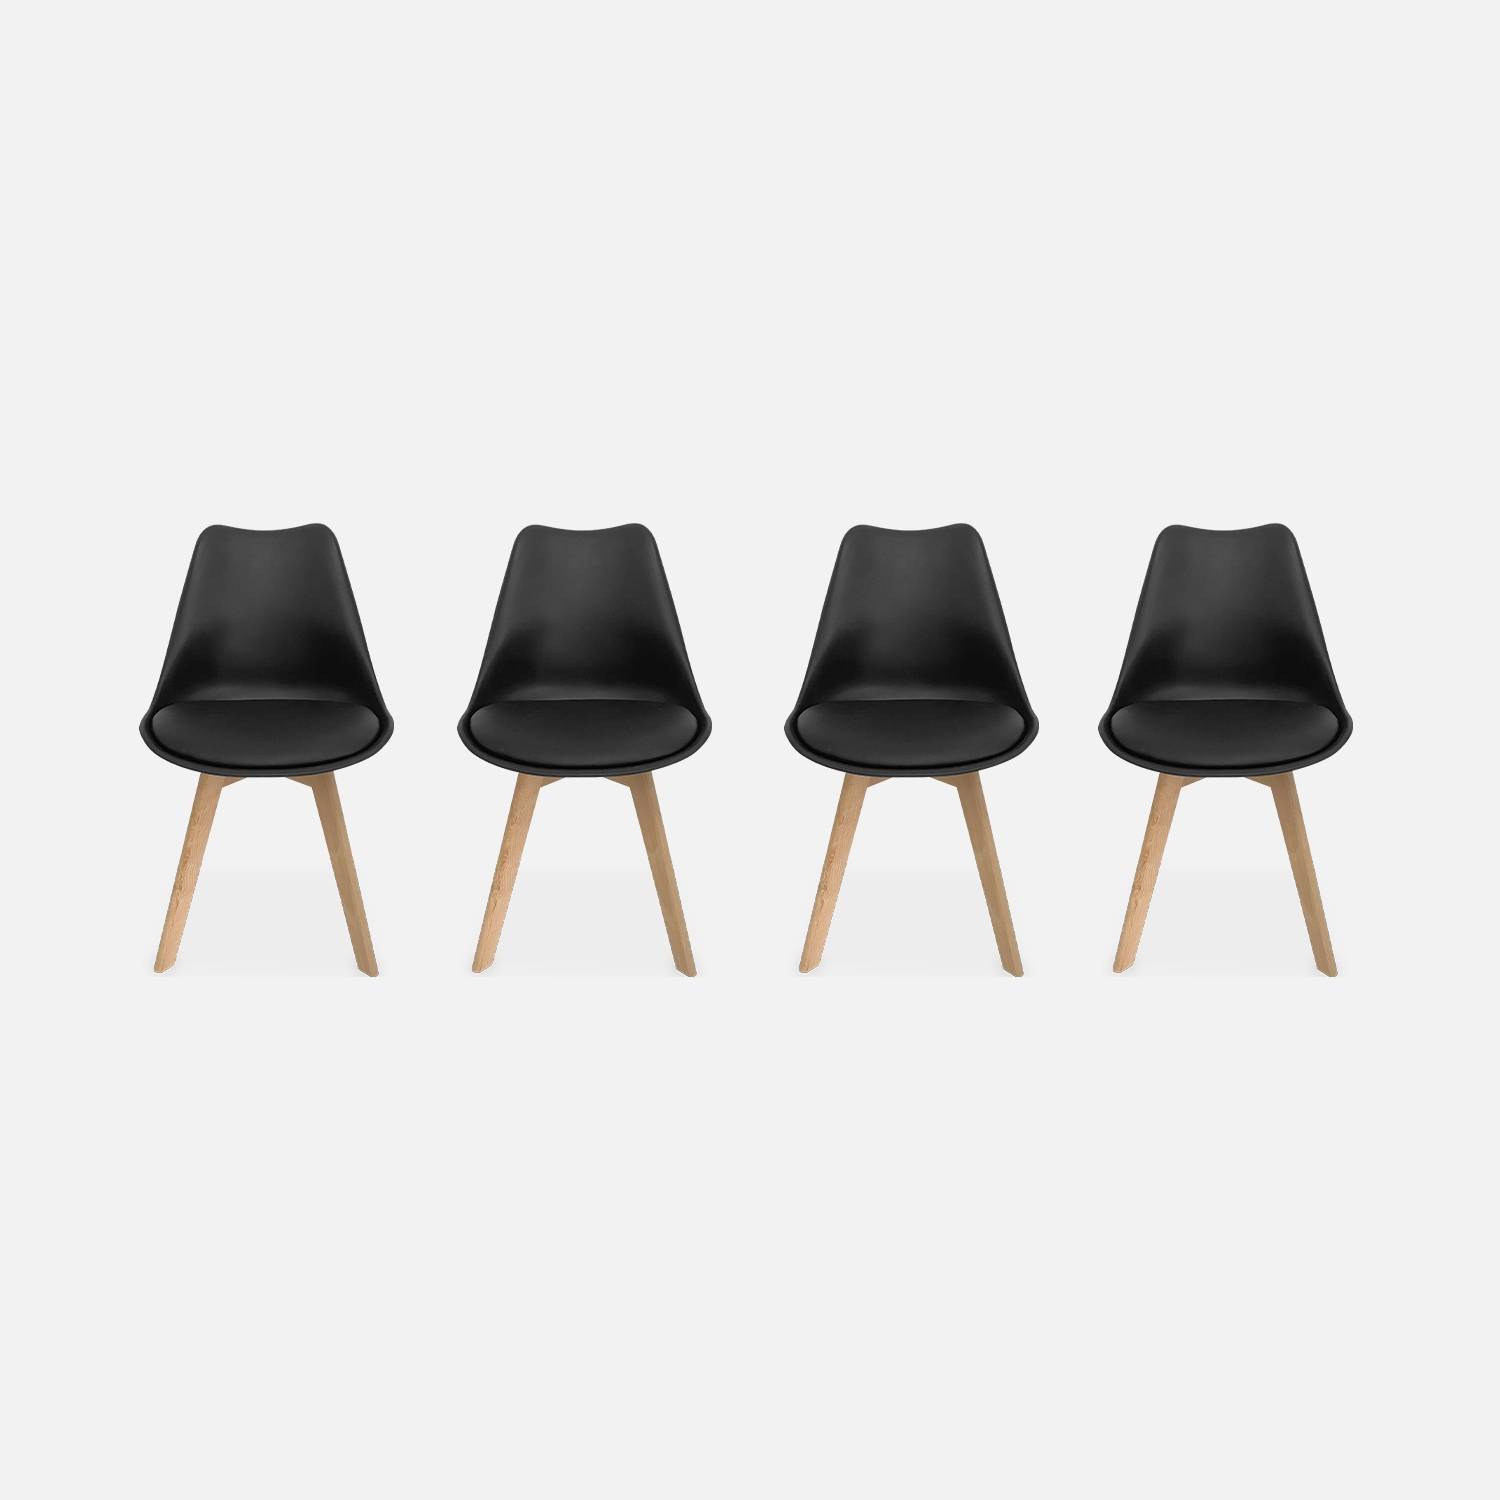 4 scandinavian chairs, black beechwood legs | sweeek